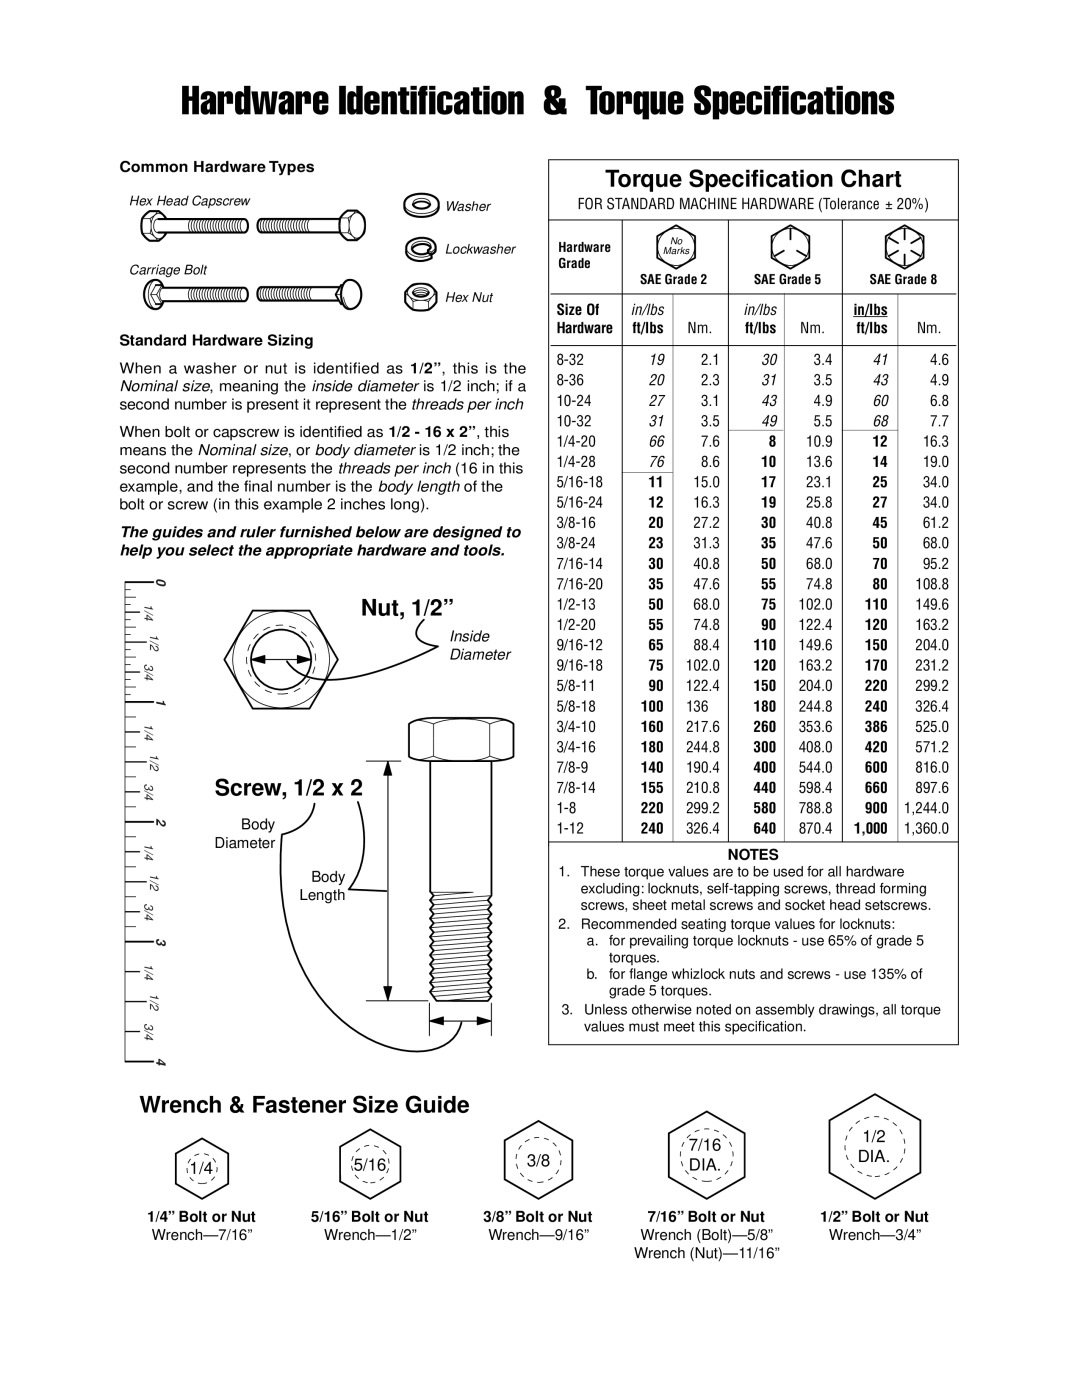 Simplicity 16HP Hardware Identification & Torque Specifications, Torque Specification Chart, Nut, 1/2”, Screw, 1/2 x, 7/16 